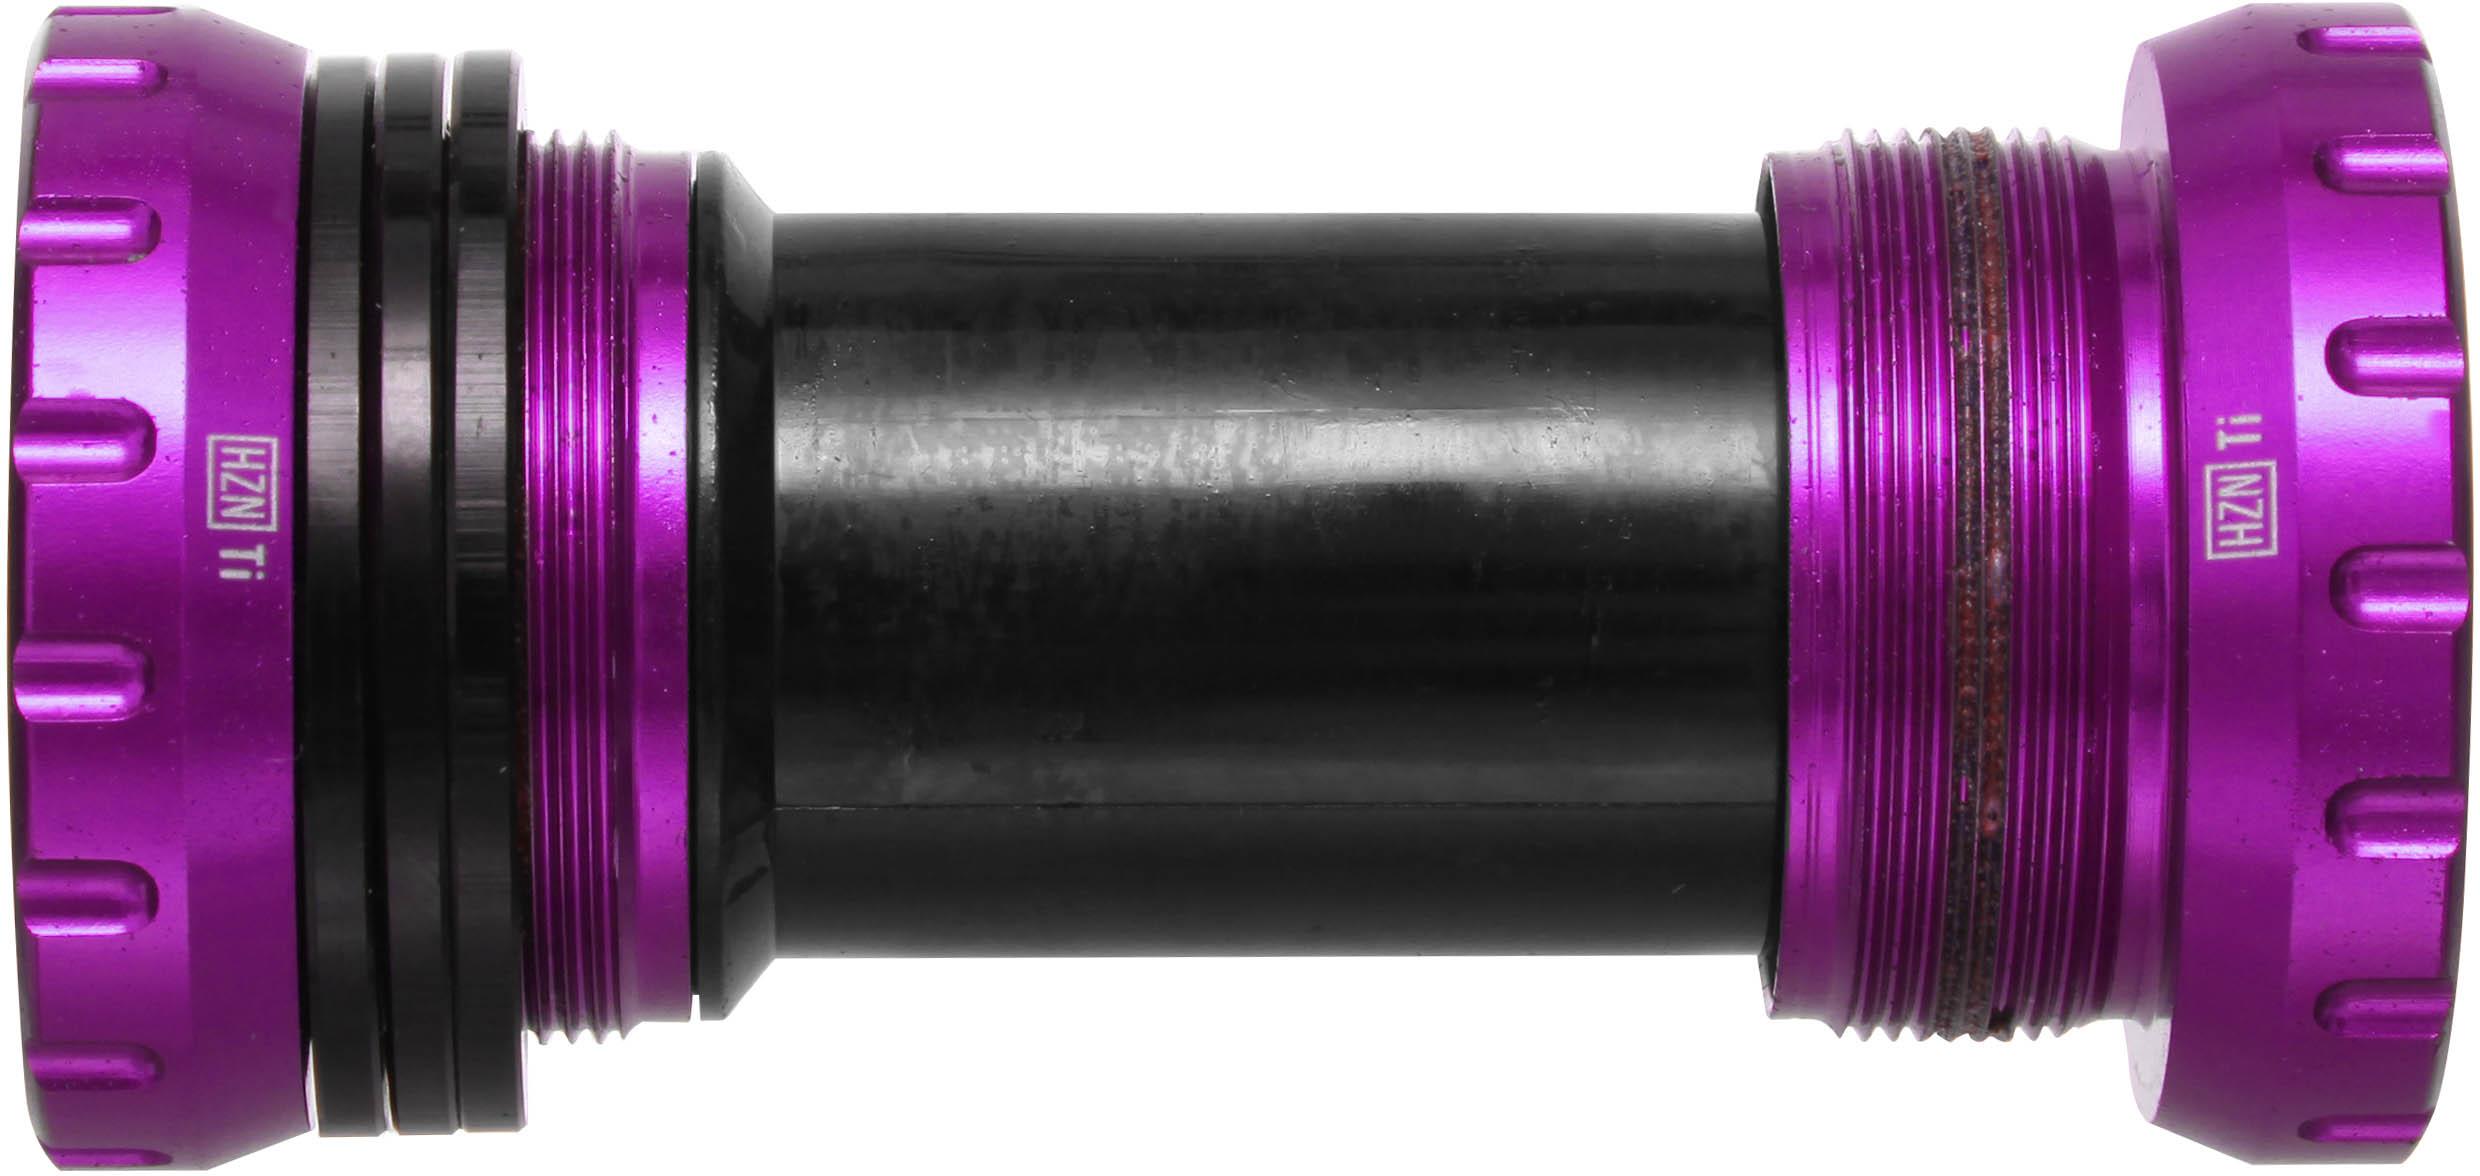 Nukeproof Horizon Shimano Bottom Bracket (24mm)  Purple